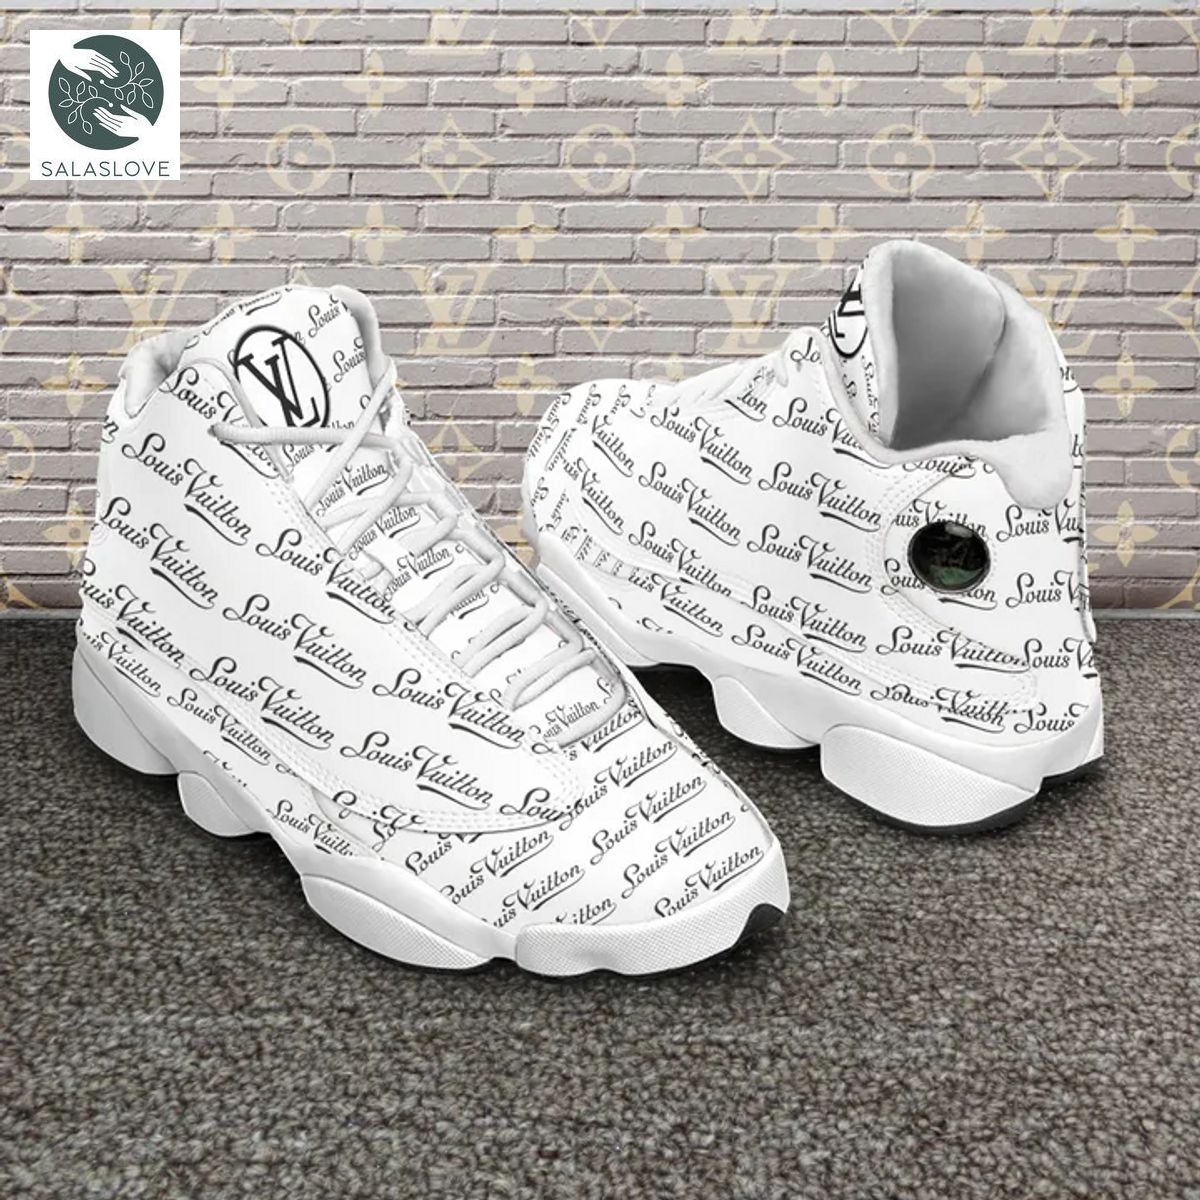 White Shoes Louis Vuitton Air Jordan 13 custom shoes sneakers